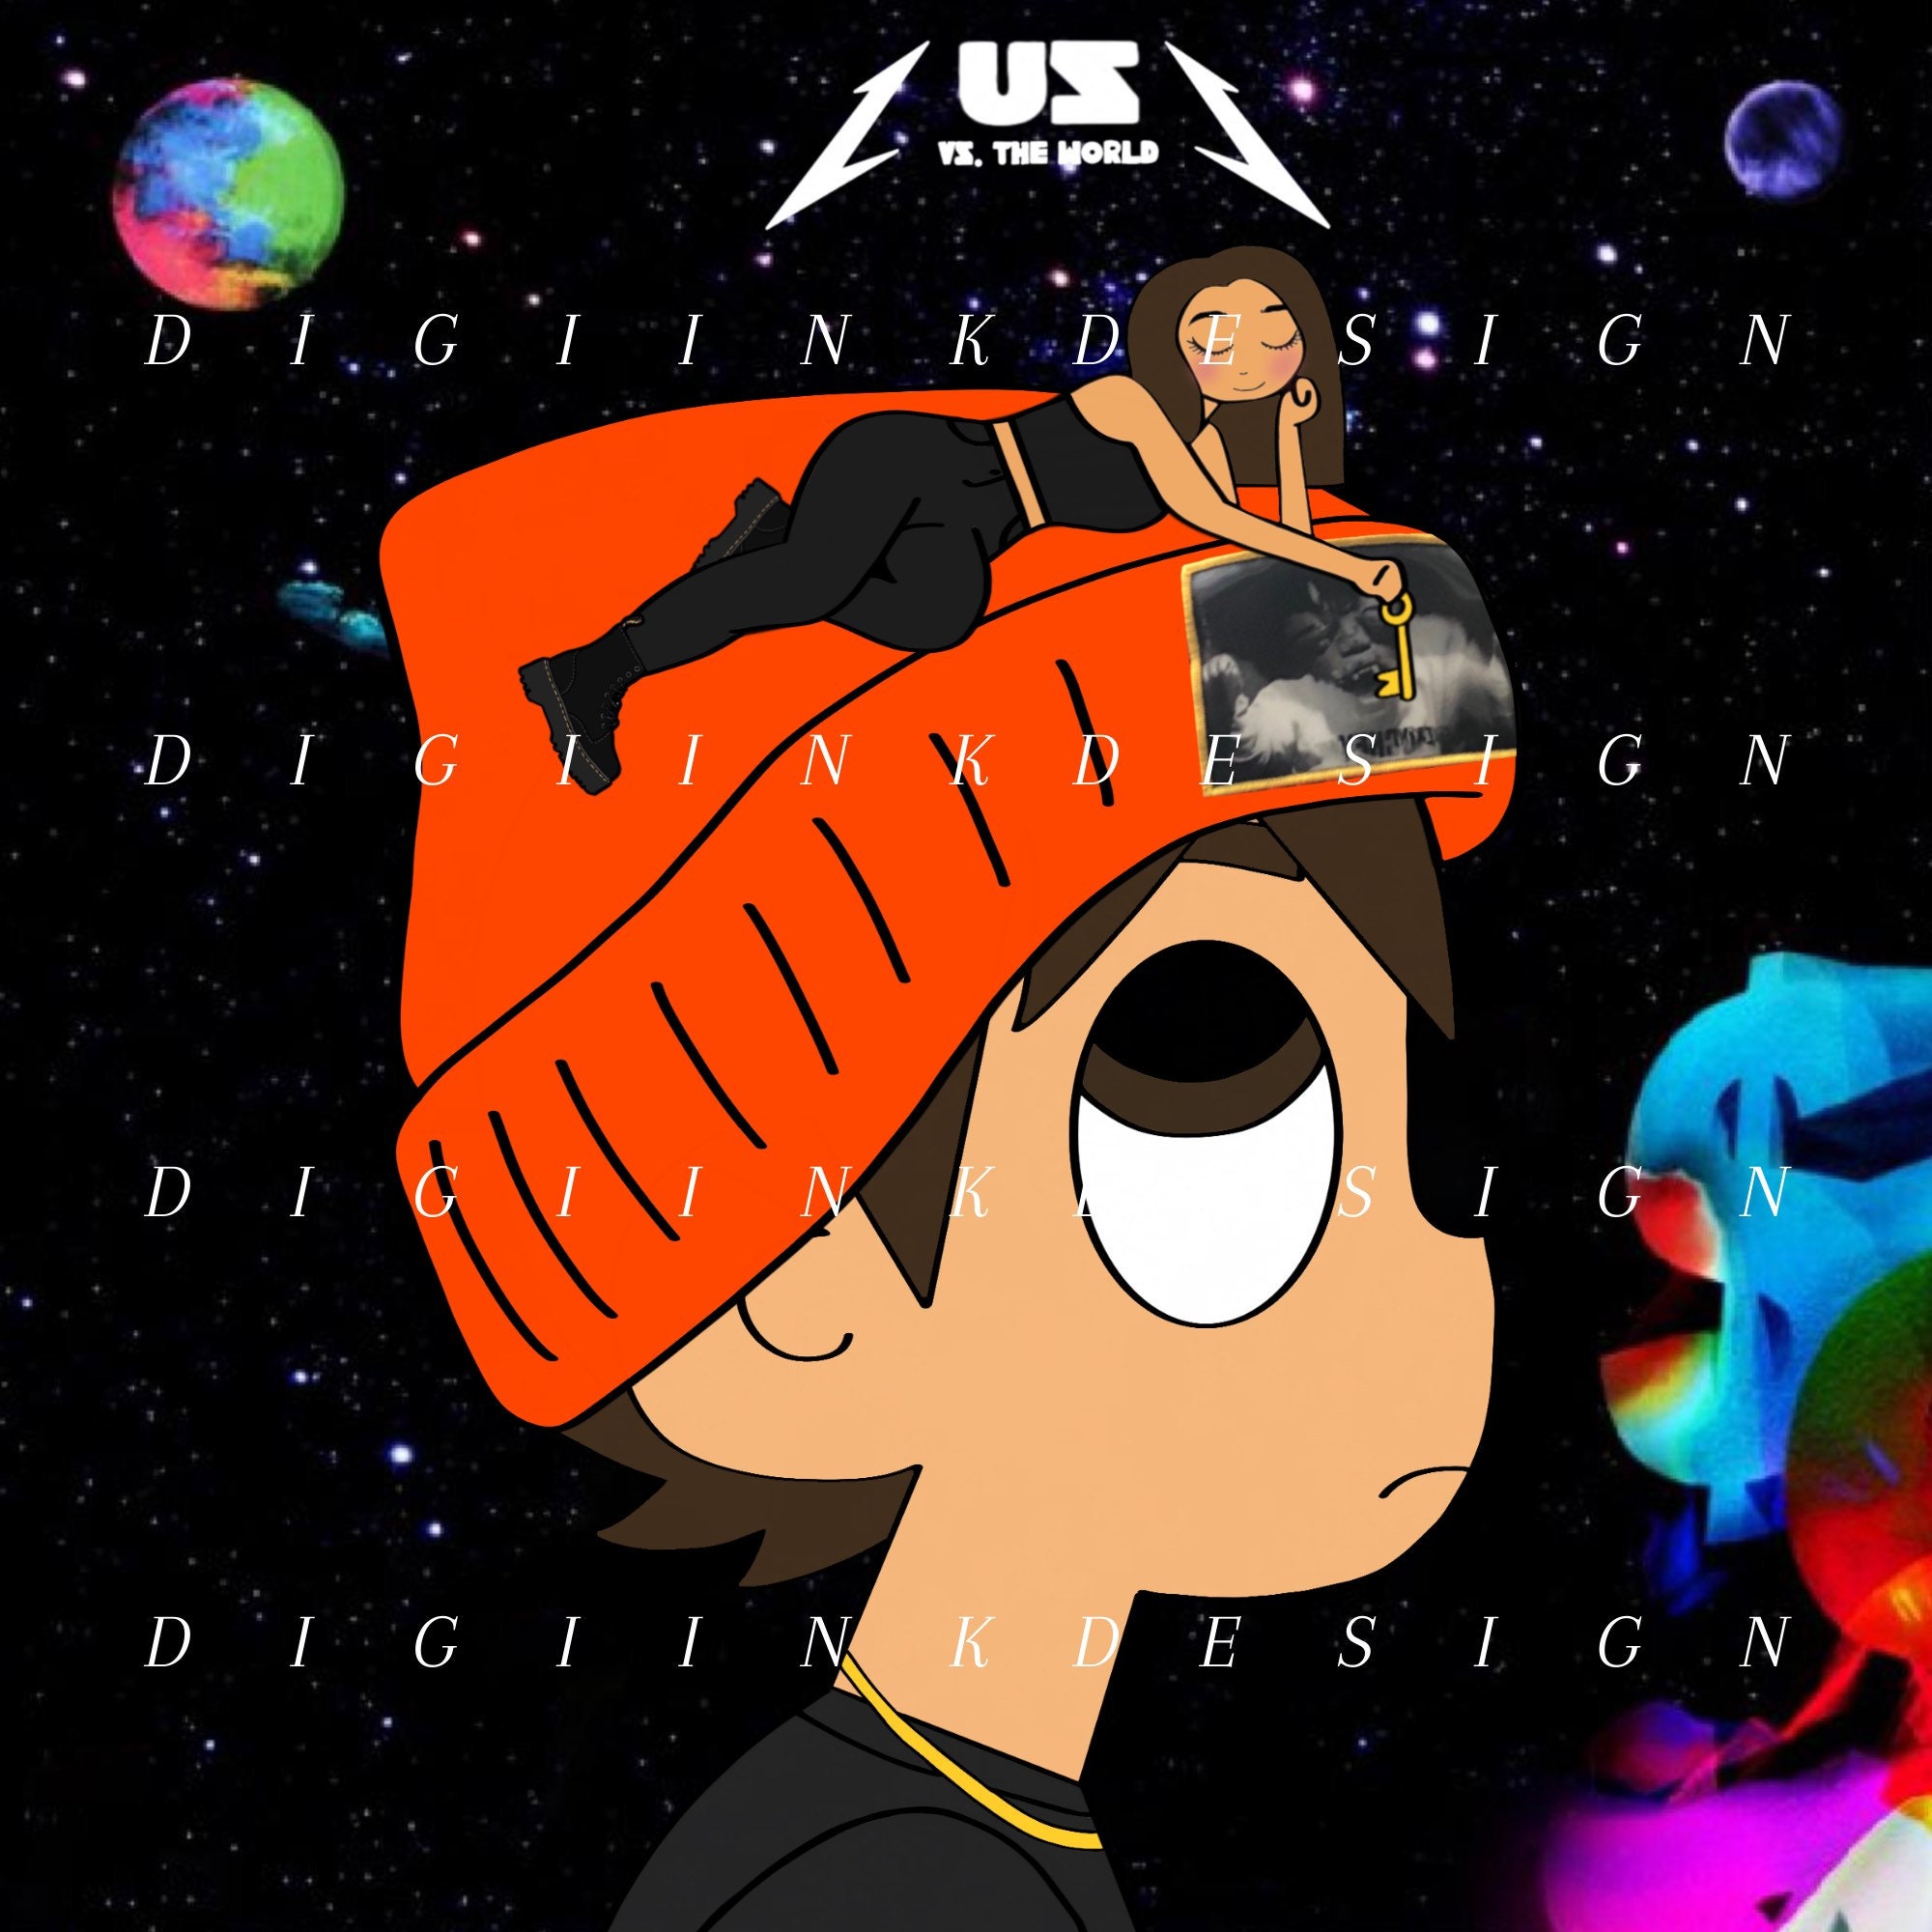 Lil Uzi Album Cover Template